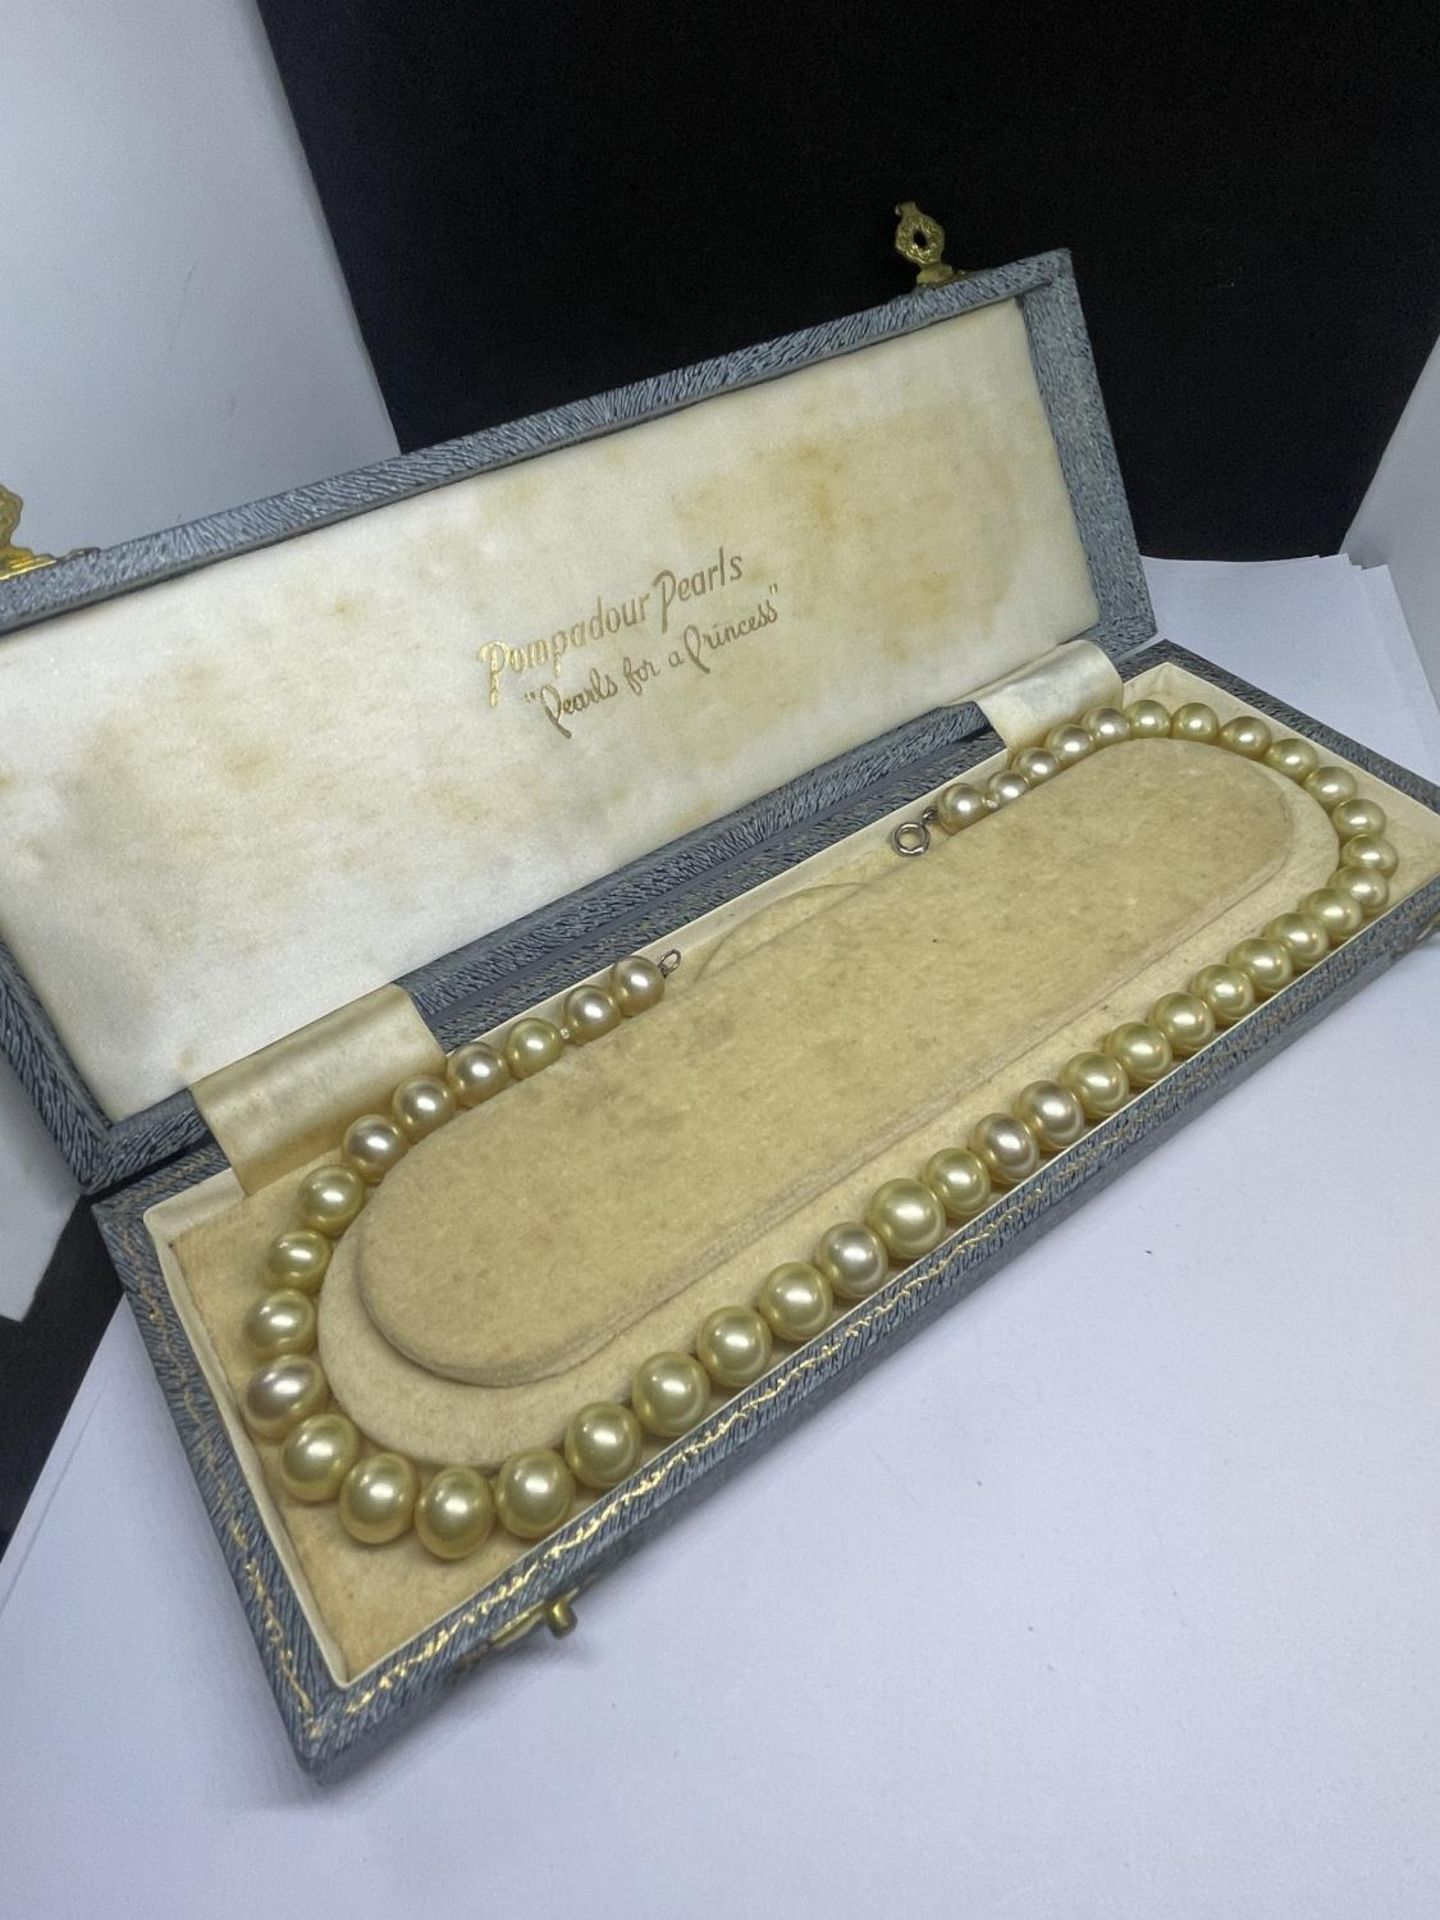 A PEARL NECKLACE IN A PRESENTATION BOX